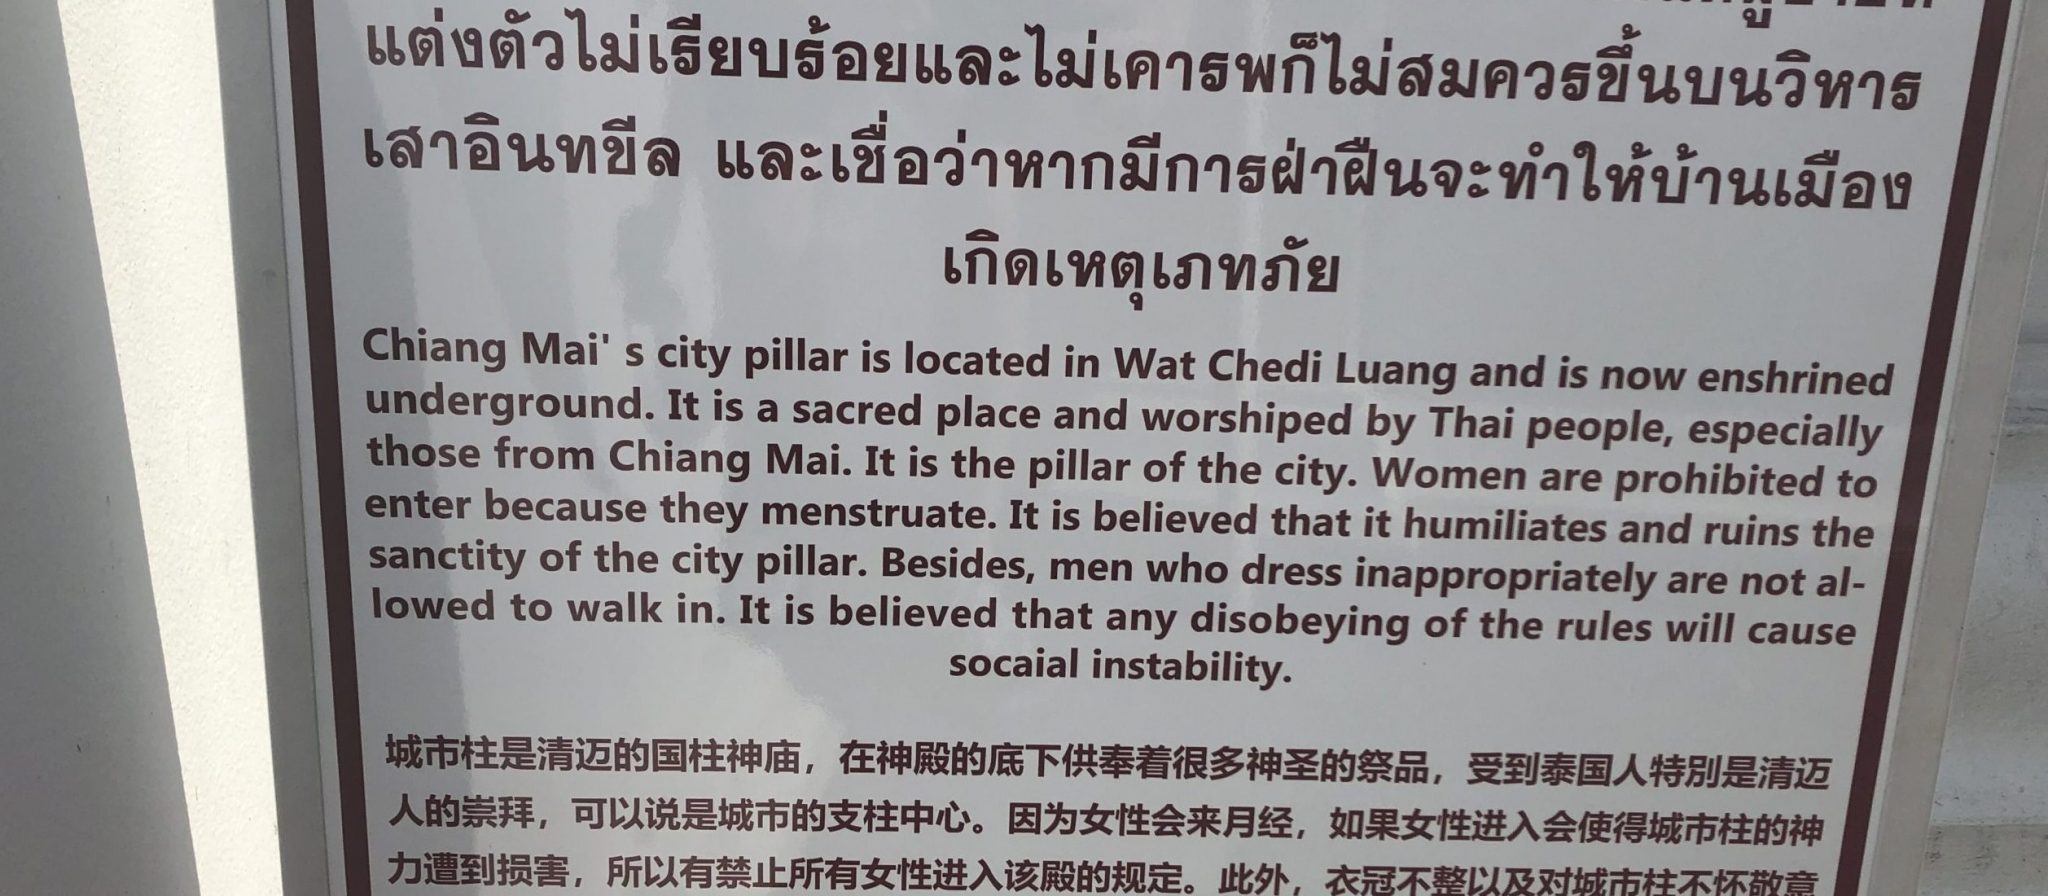 Sign at Chiang Mai temple prohibiting "menstruation"...